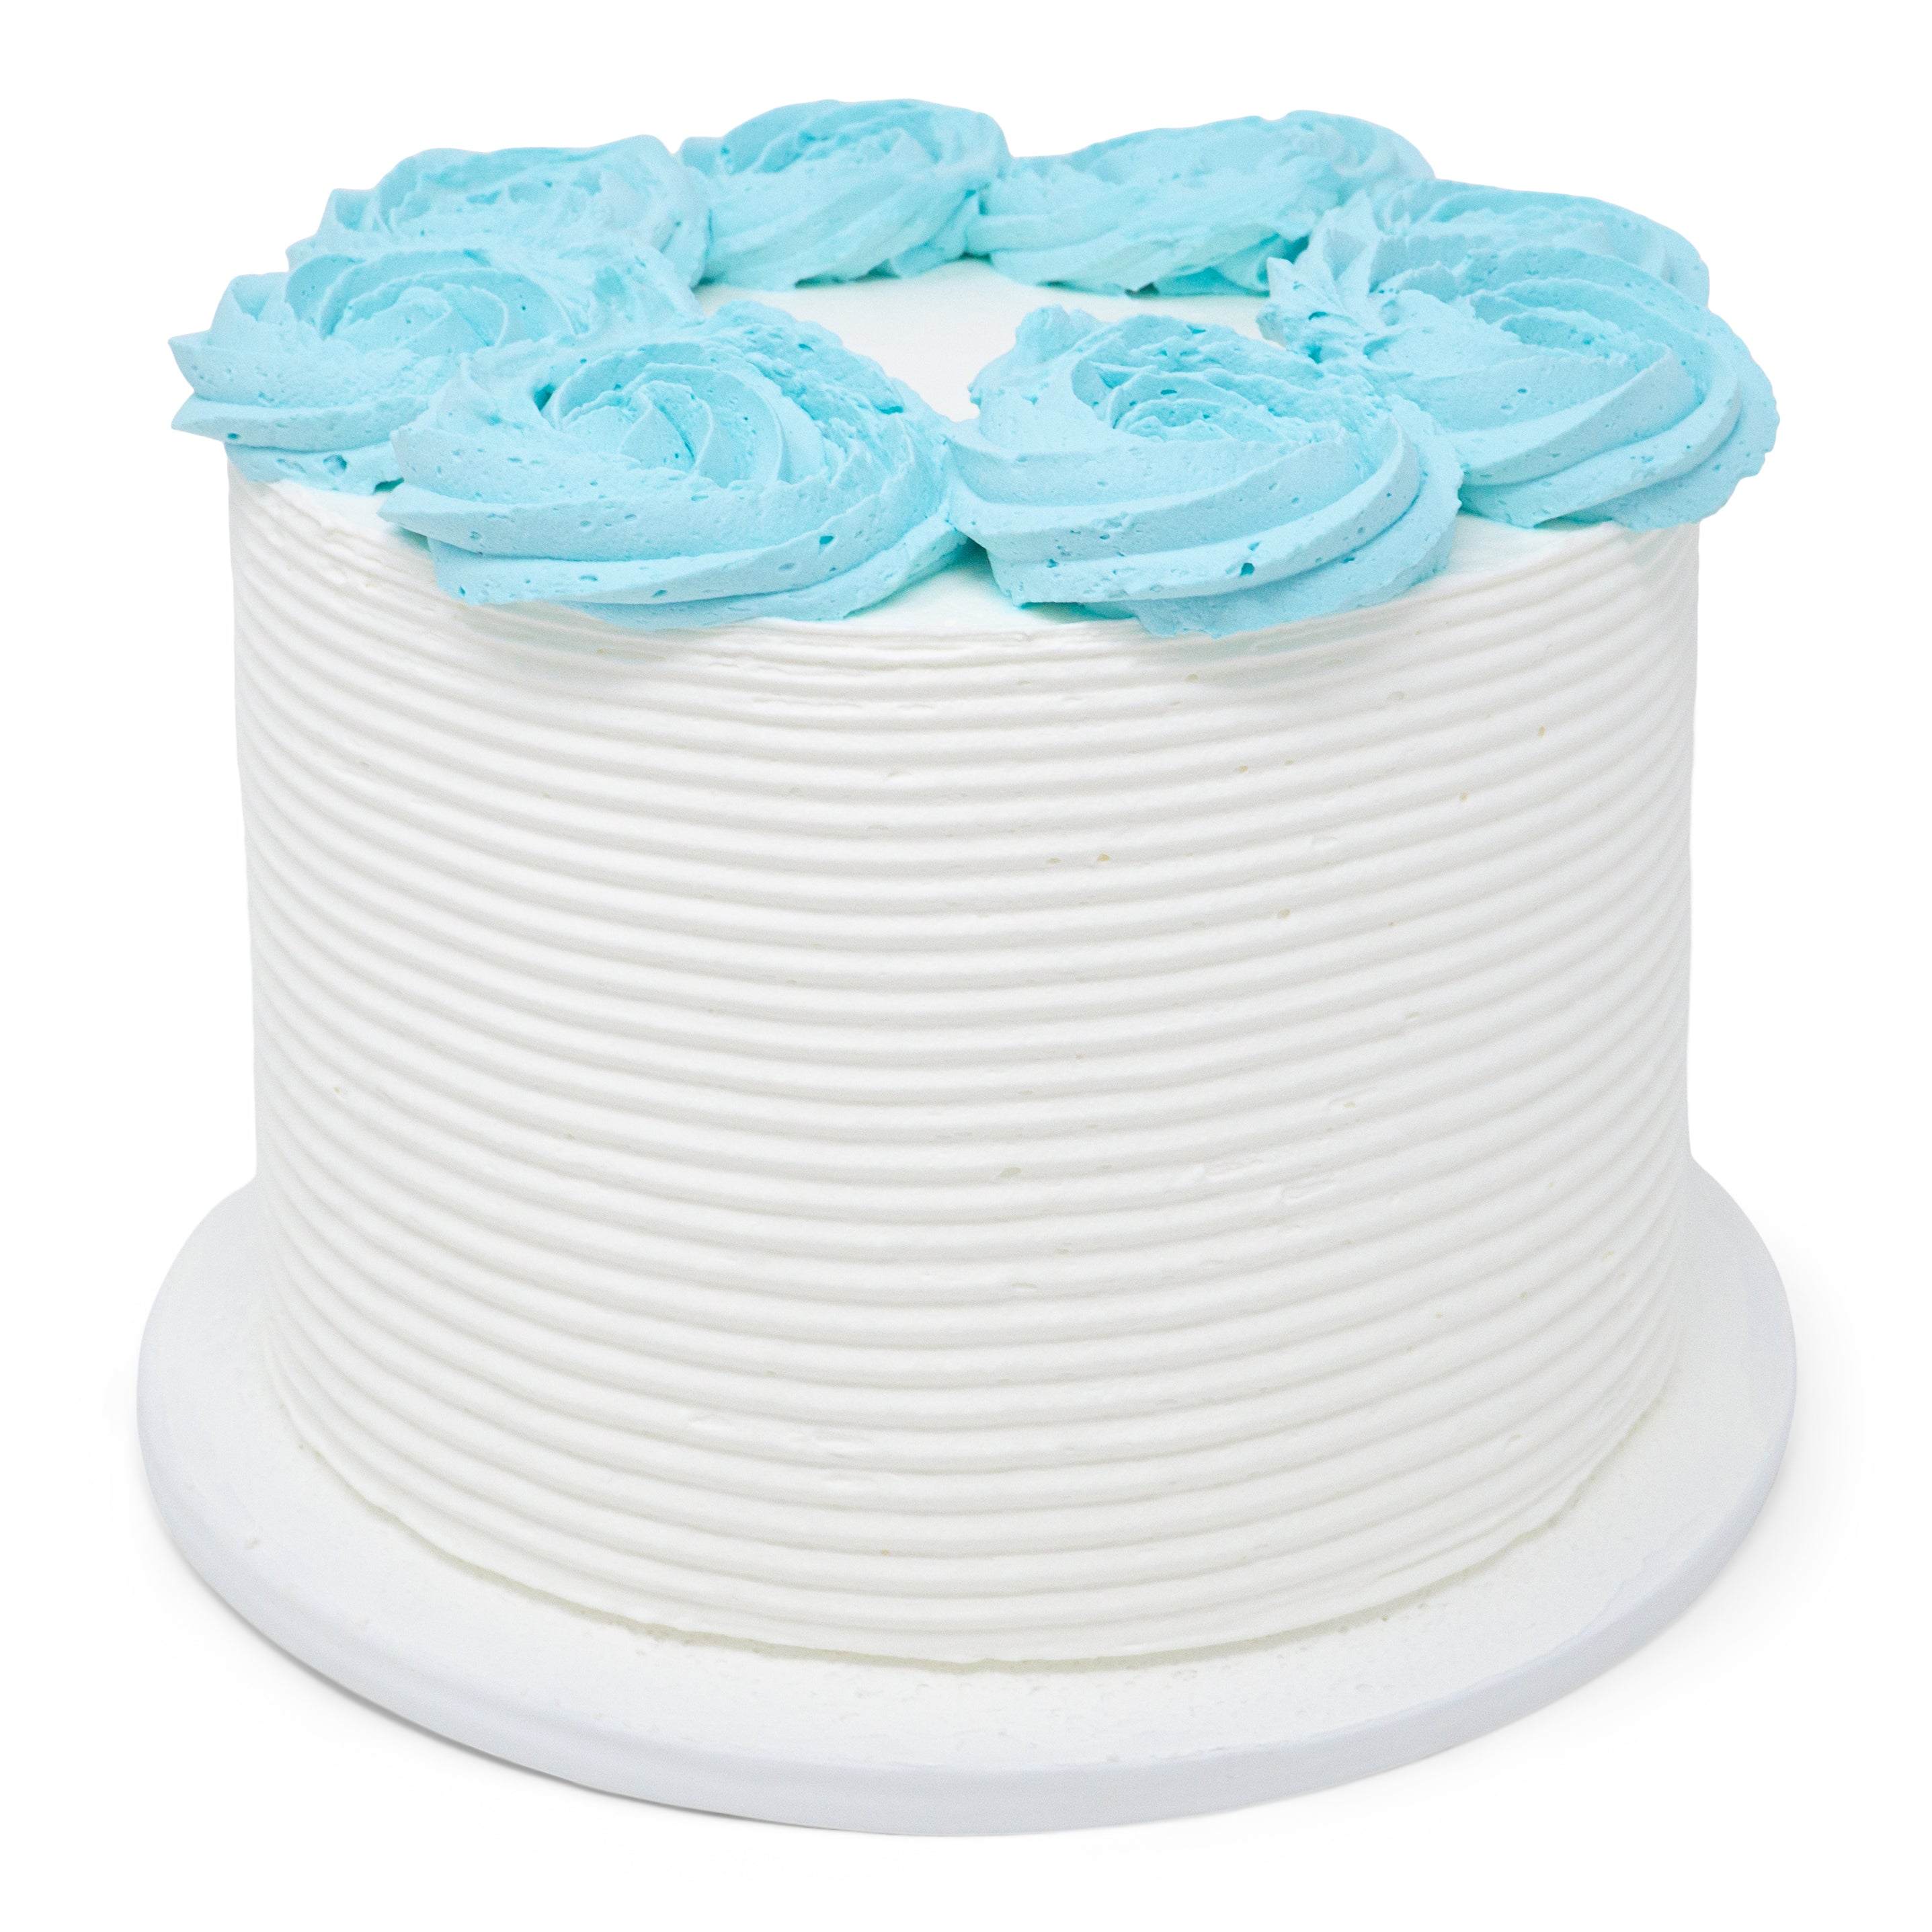 Light blue cake. – Chefjhoanes